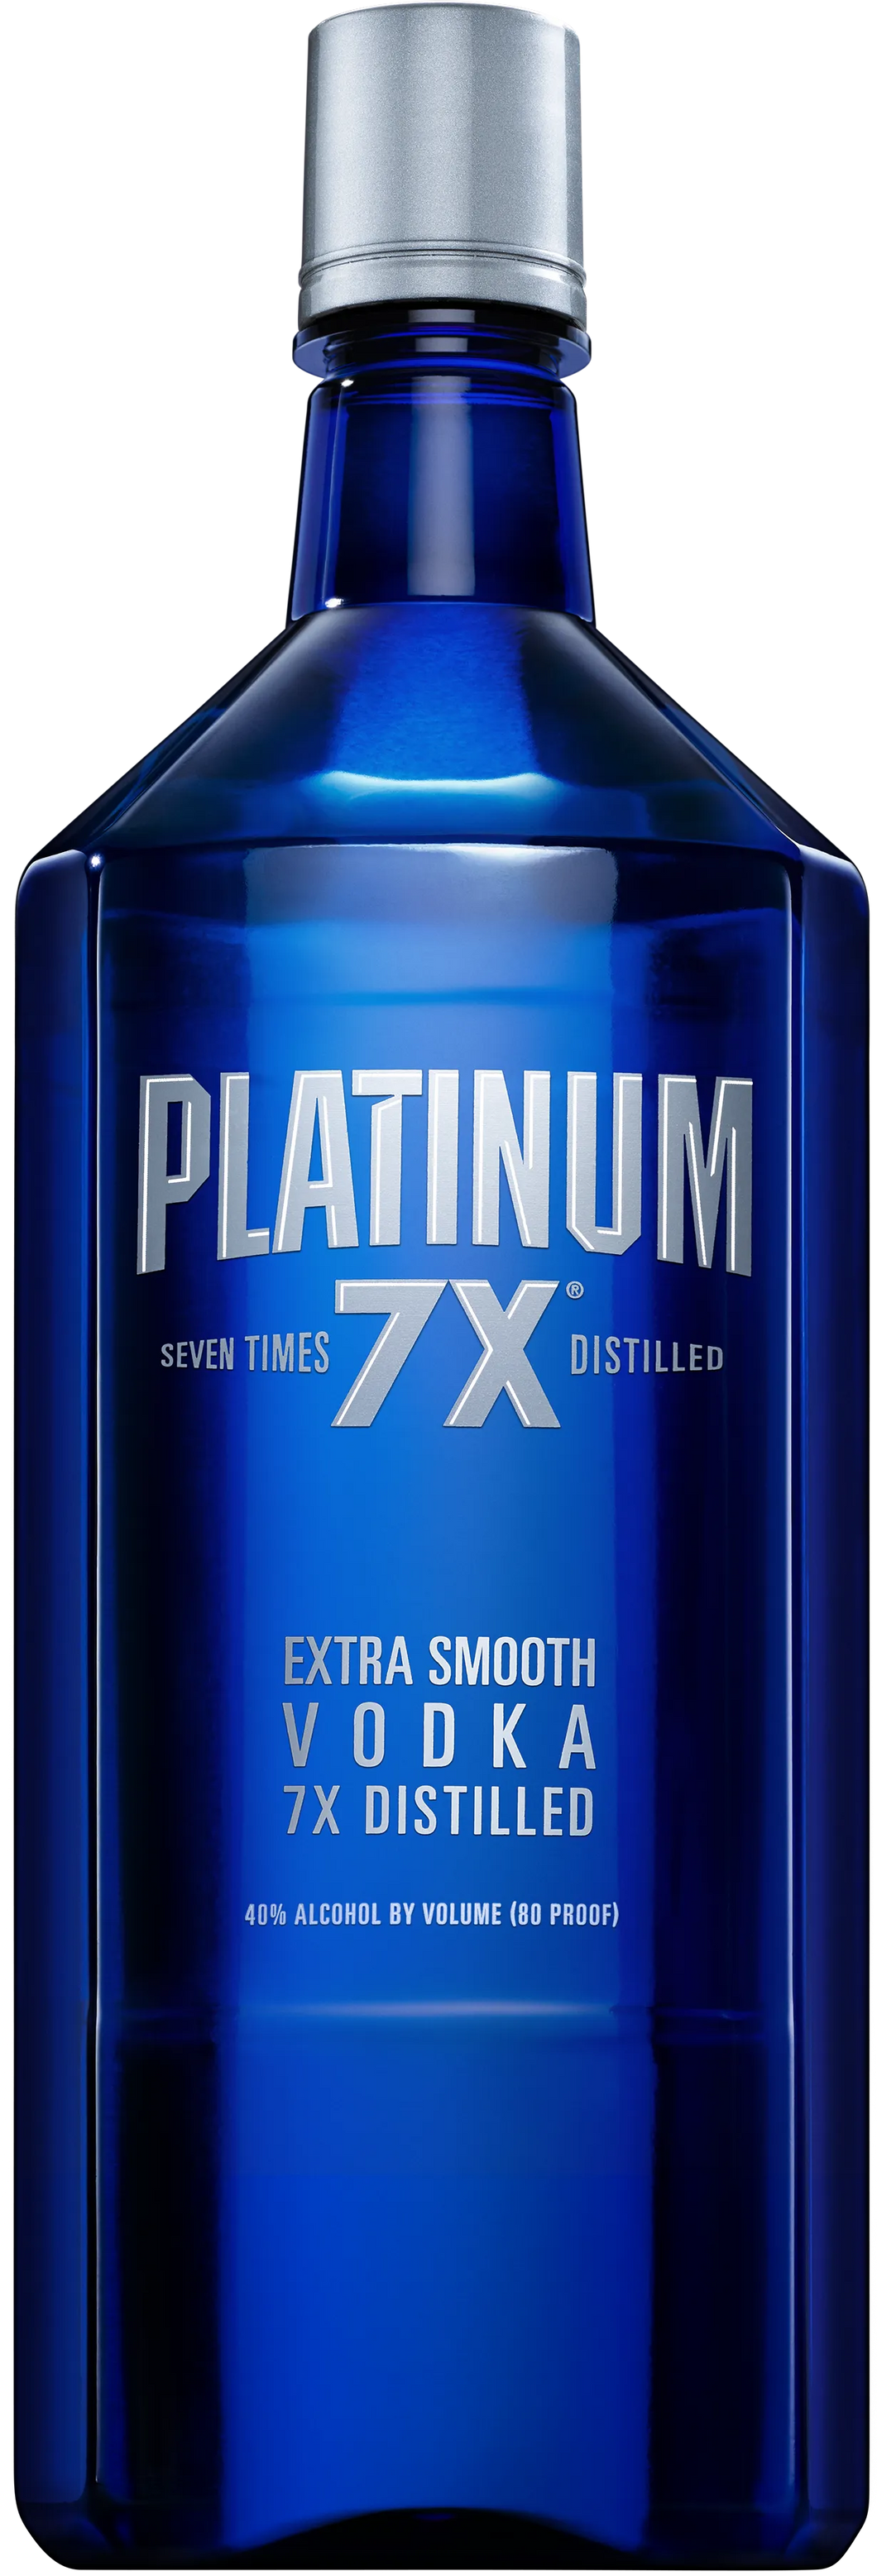 Platinum 7x Seven Times Distilled Vodka